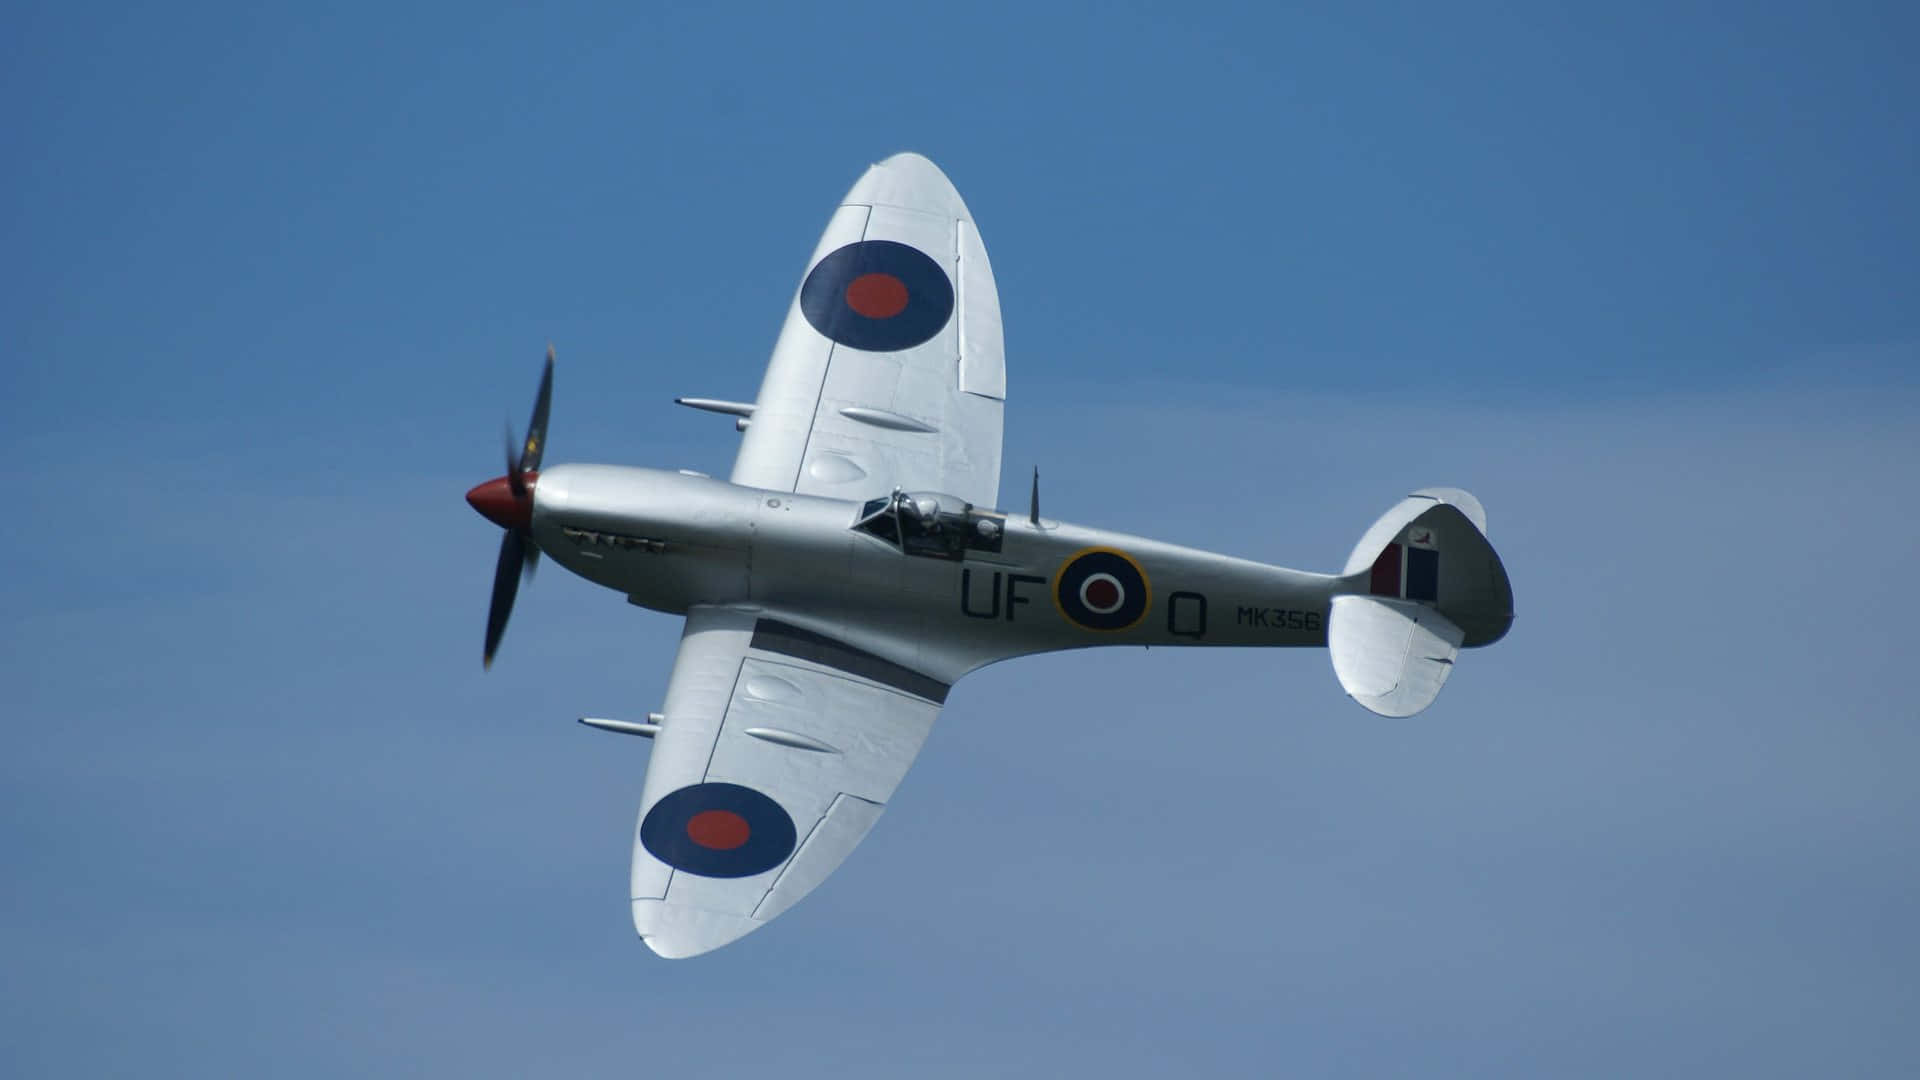 Beautiful British Spitfire Warplane Soaring in the Sky Wallpaper